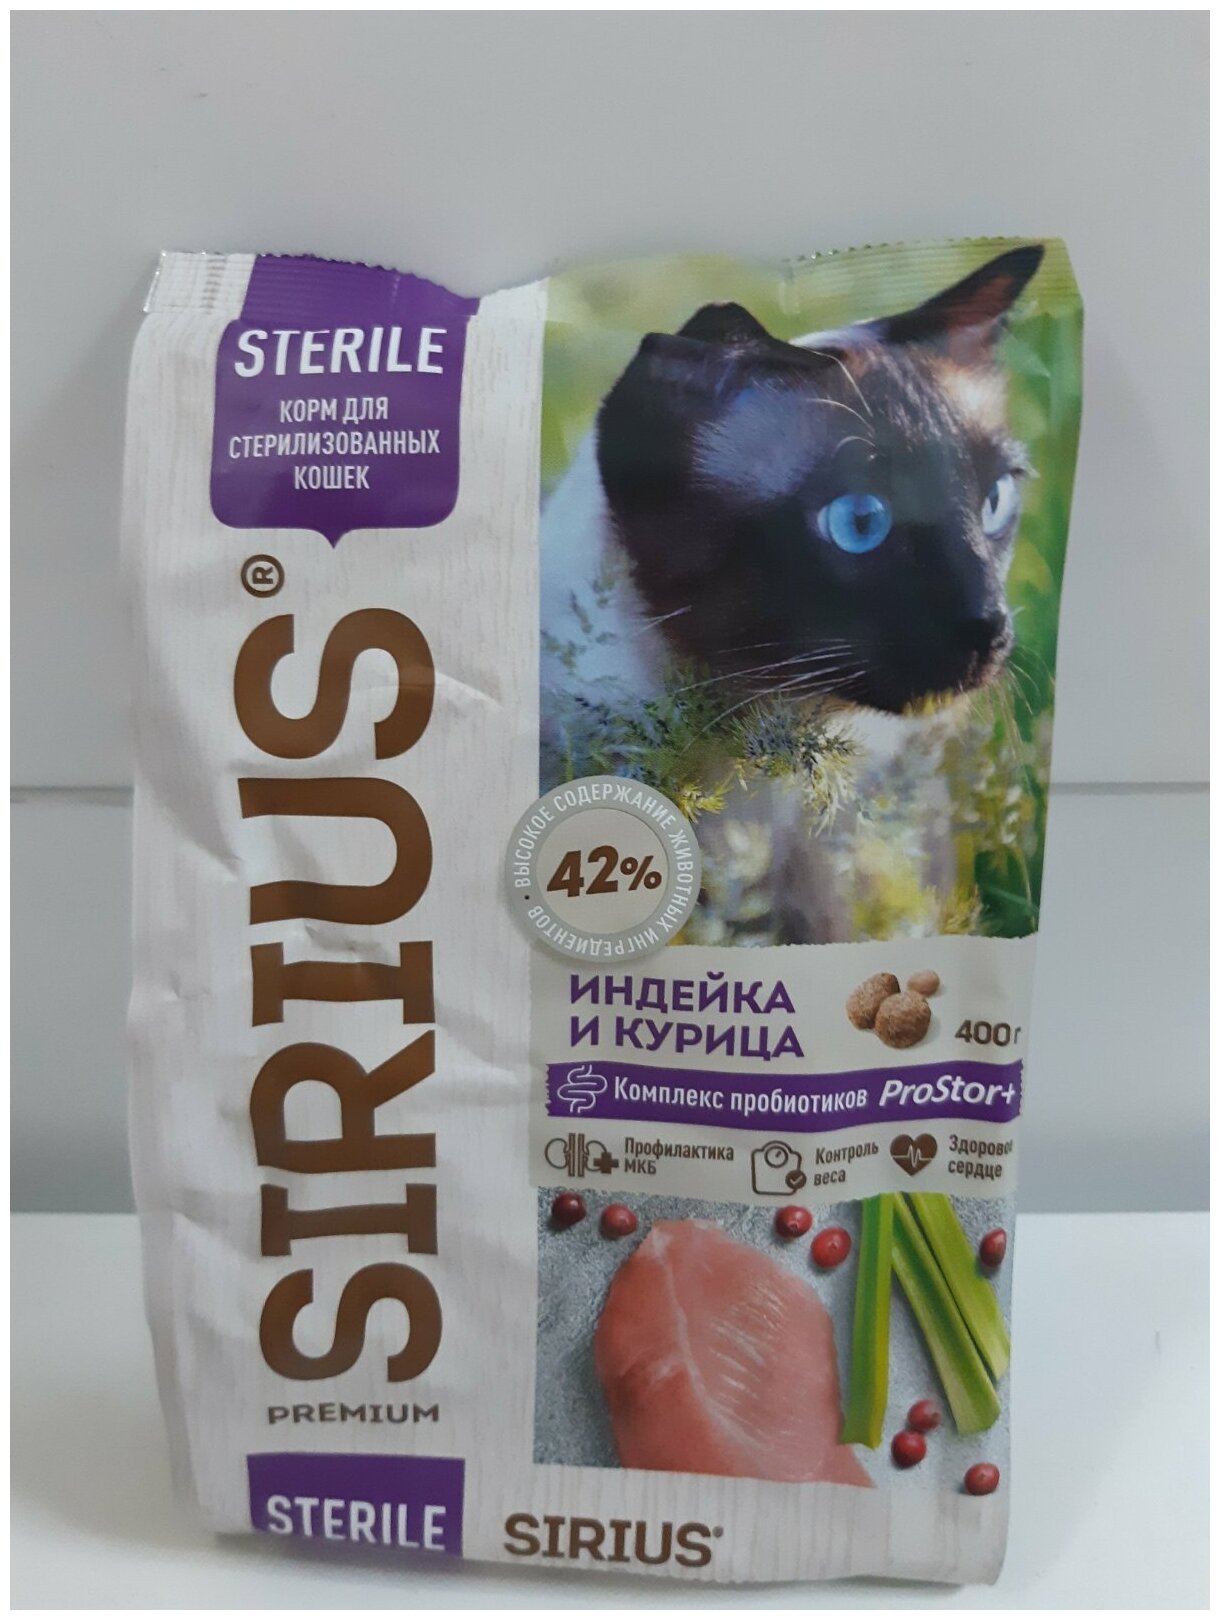 SIRIUS сухой корм для стерилизованных кошек, индейка/курица, 400 г.